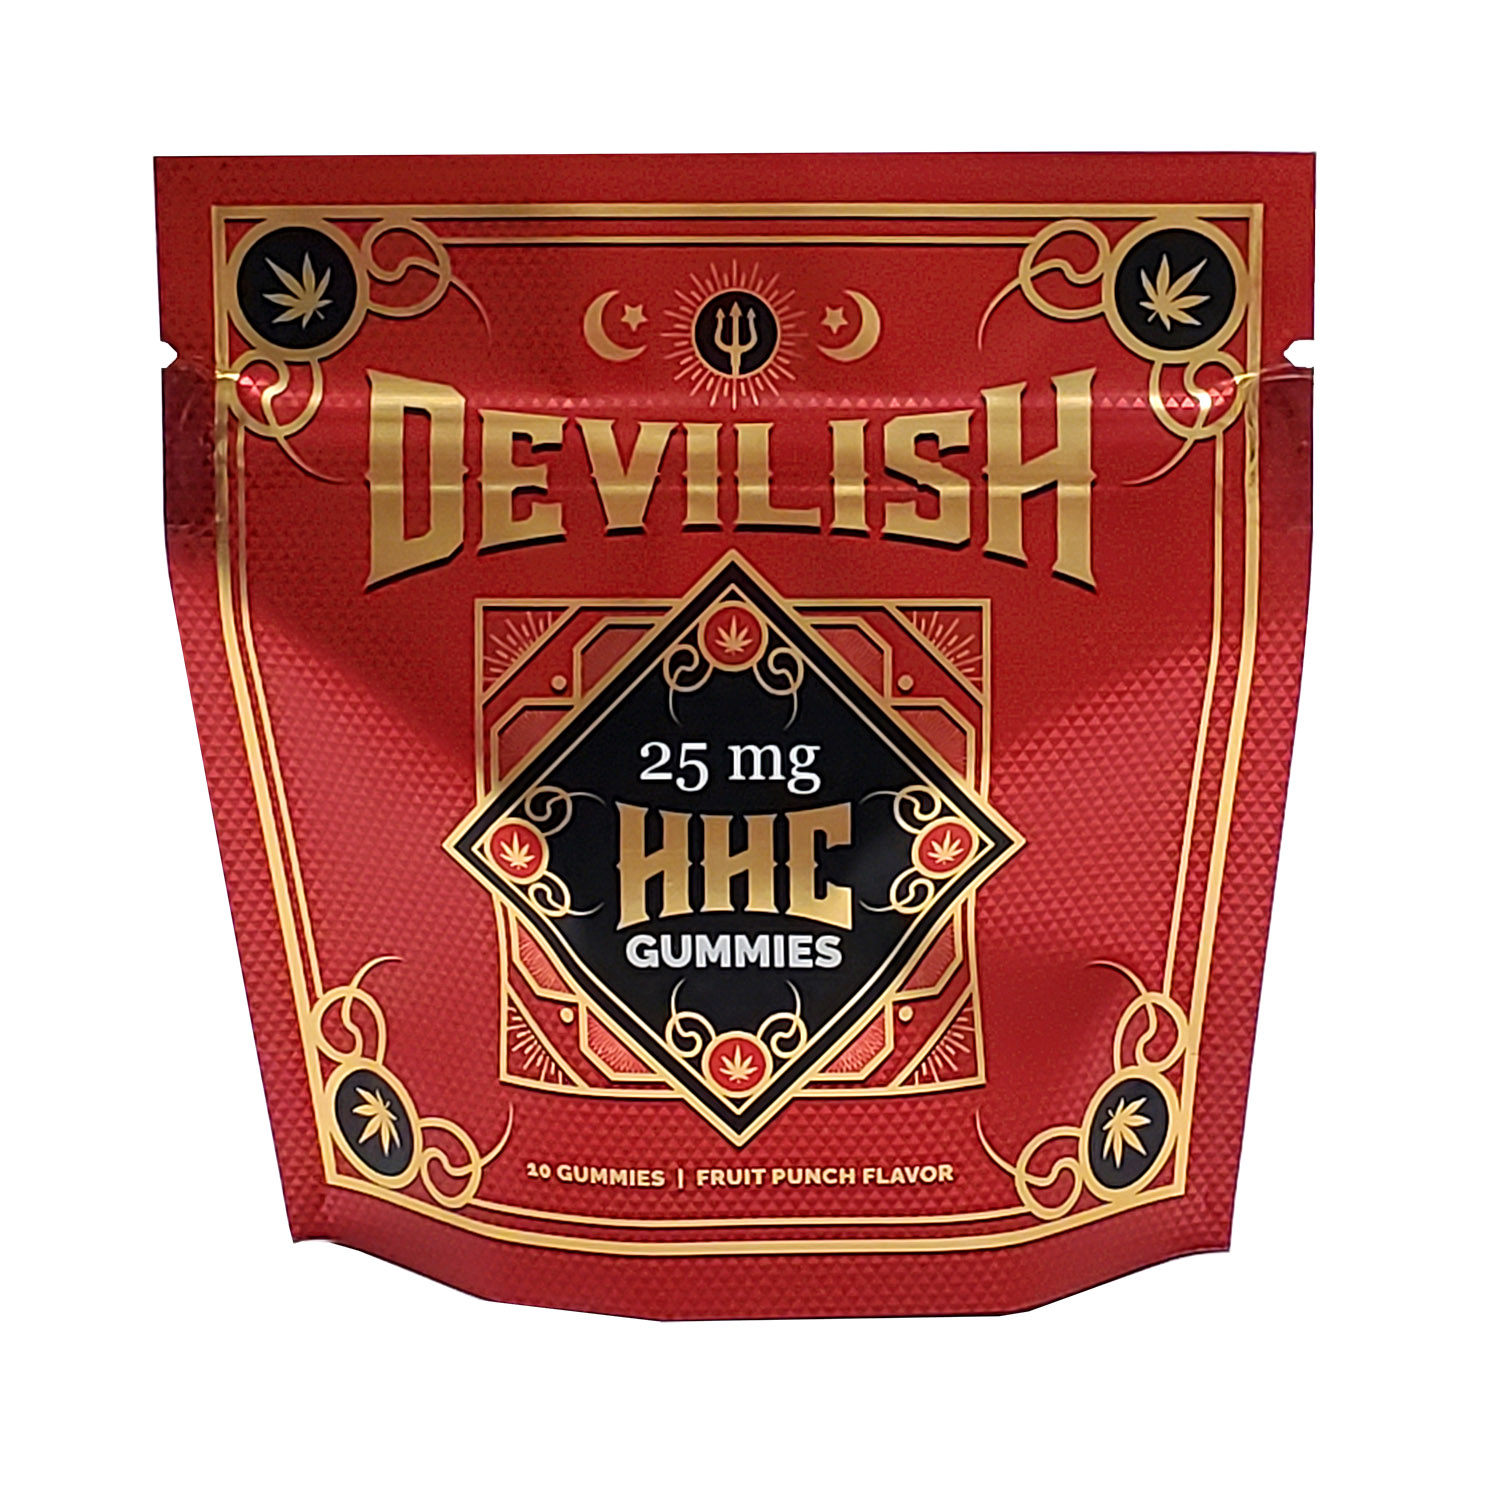 Devilish-25mg-HHC-Gummies-Fruit-Punch